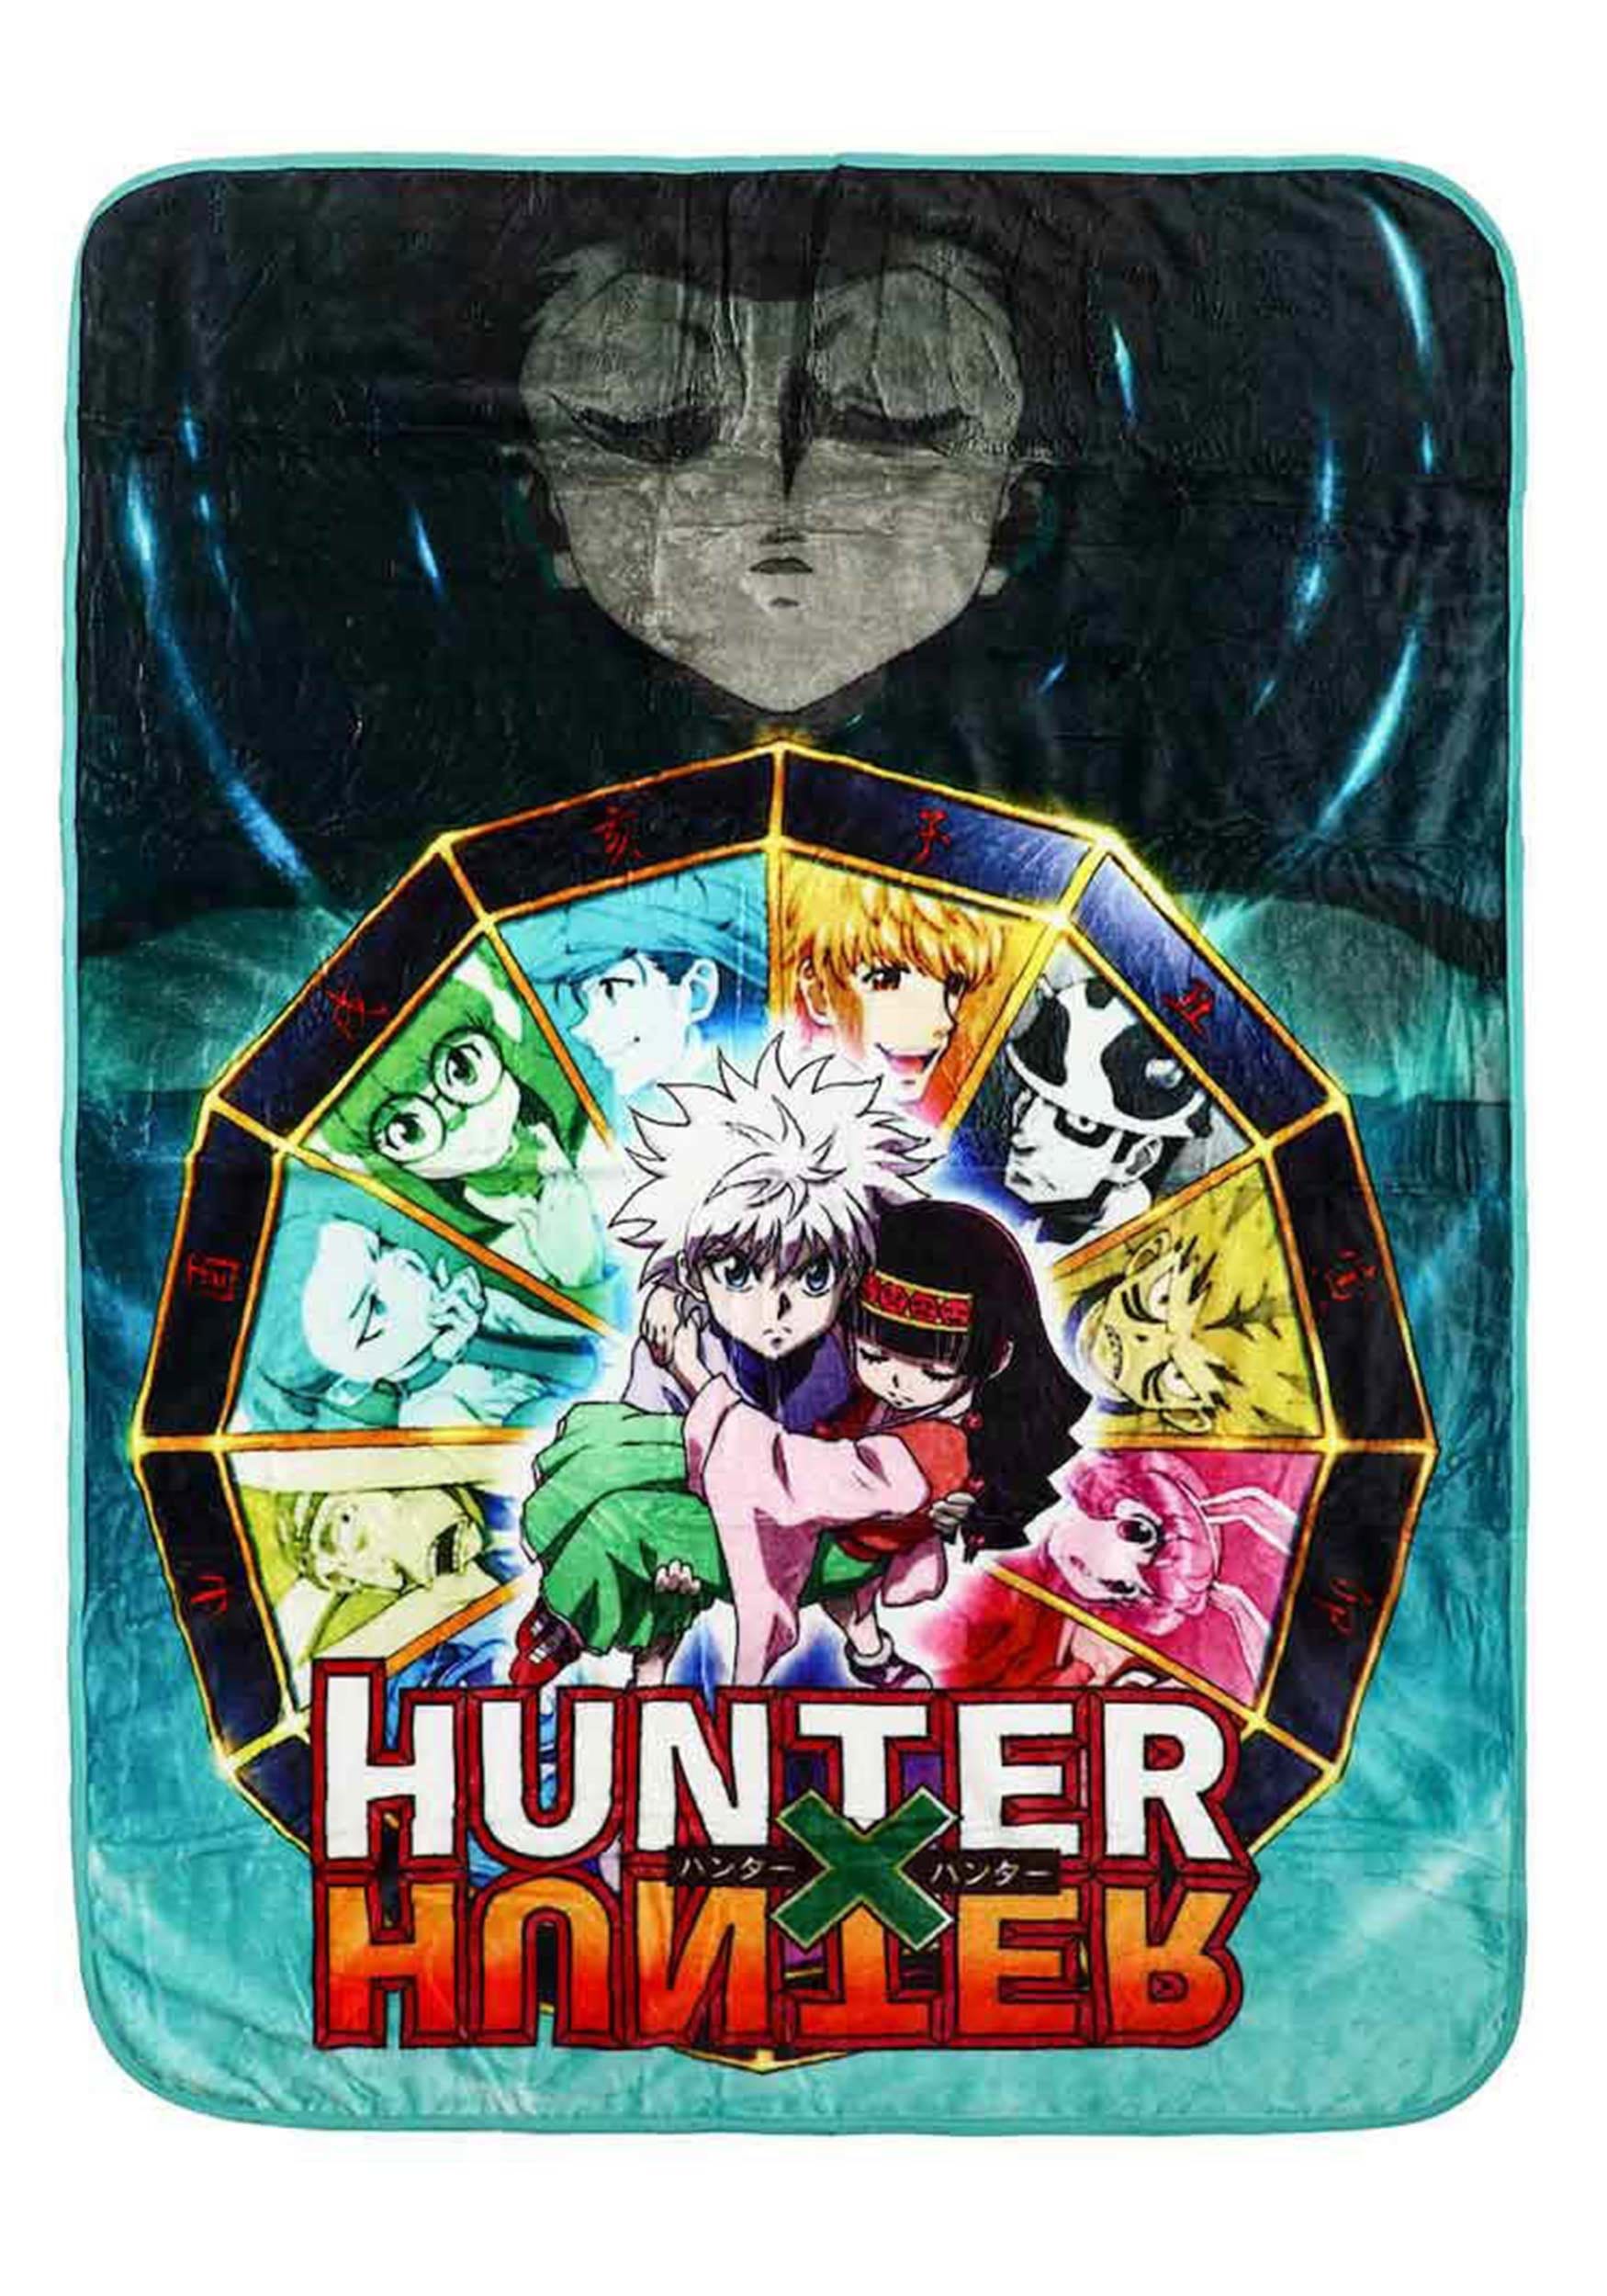 A Great Adventure Awaits! – Hunter x Hunter (2011) – First 50 Episodes  Review